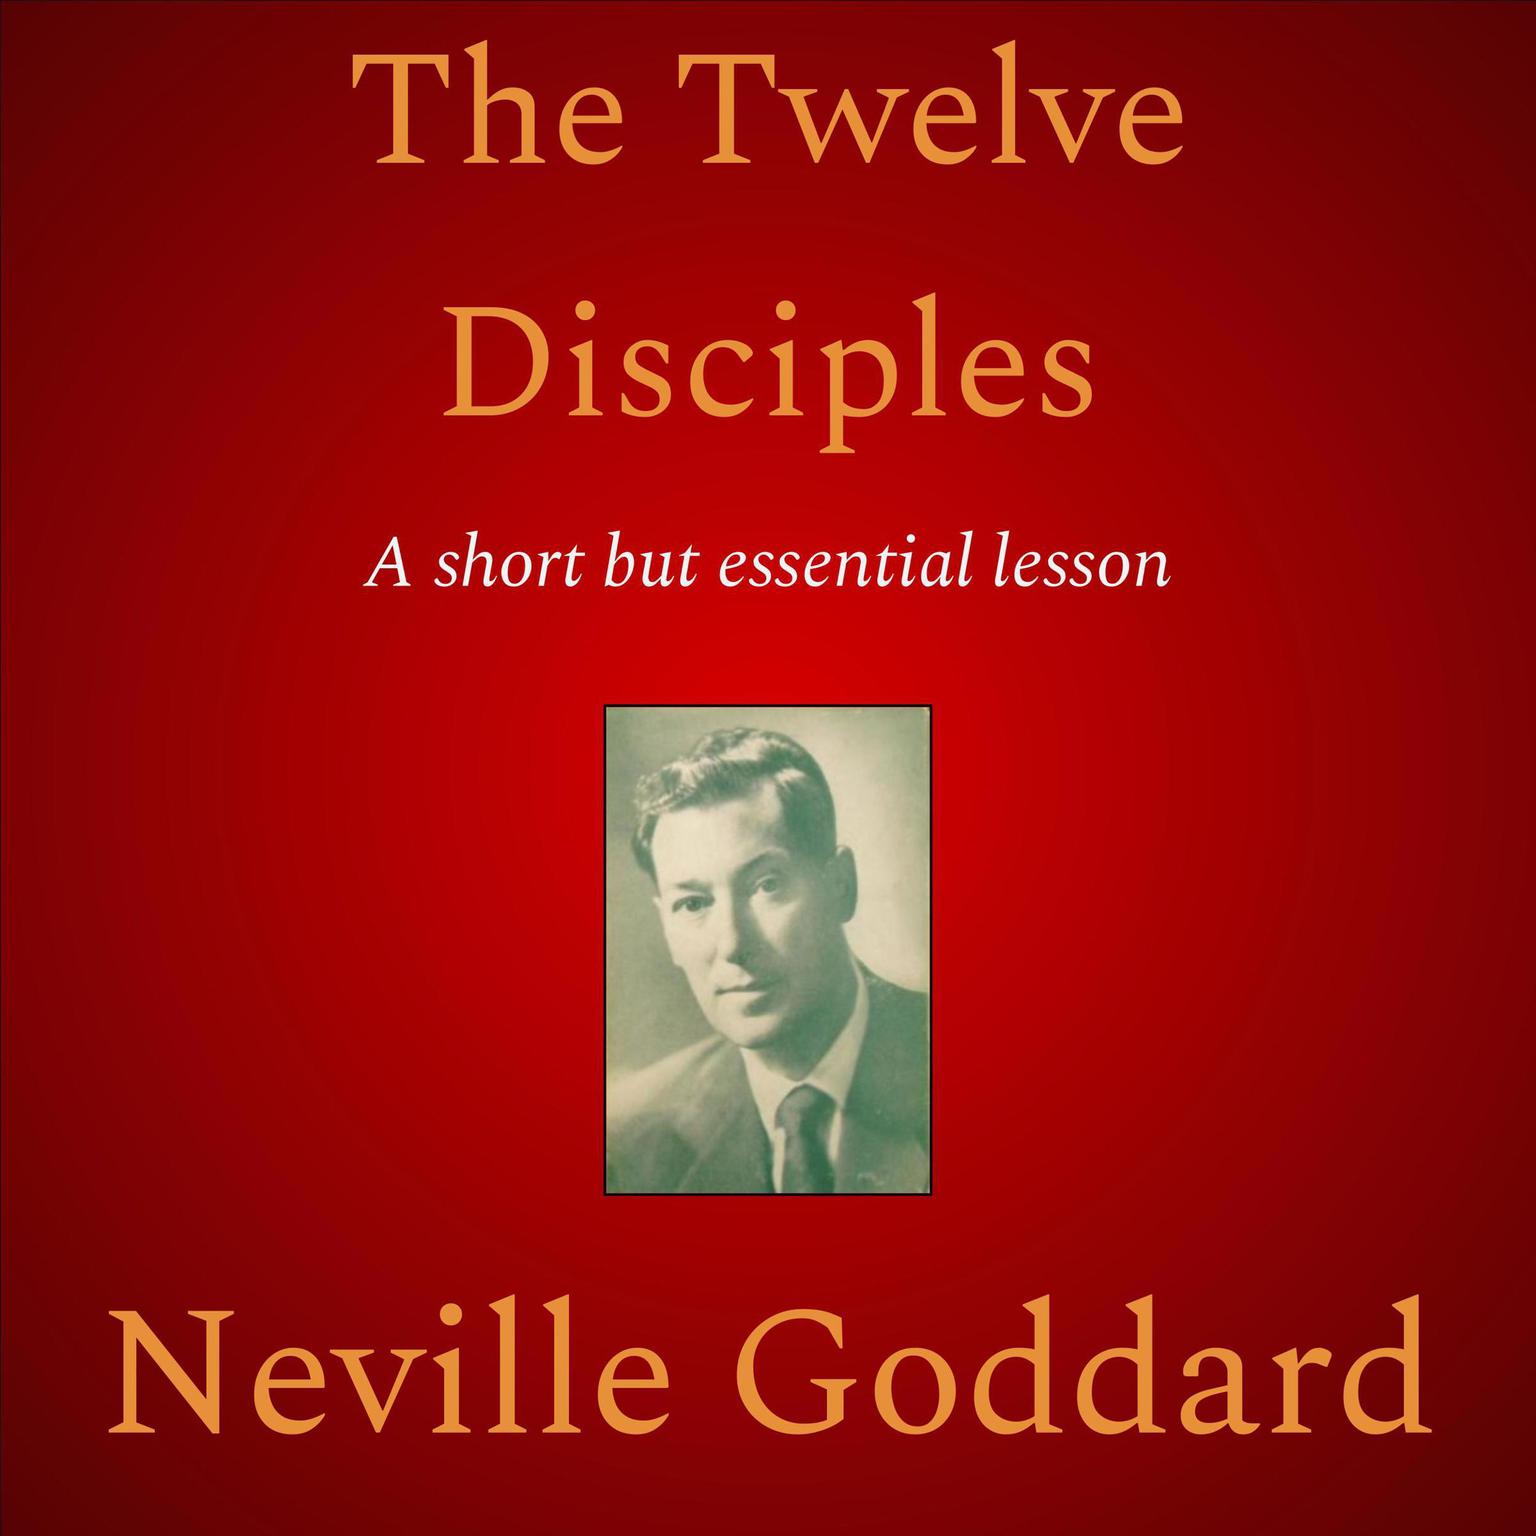 The Twelve Disciples Audiobook, by Neville Goddard